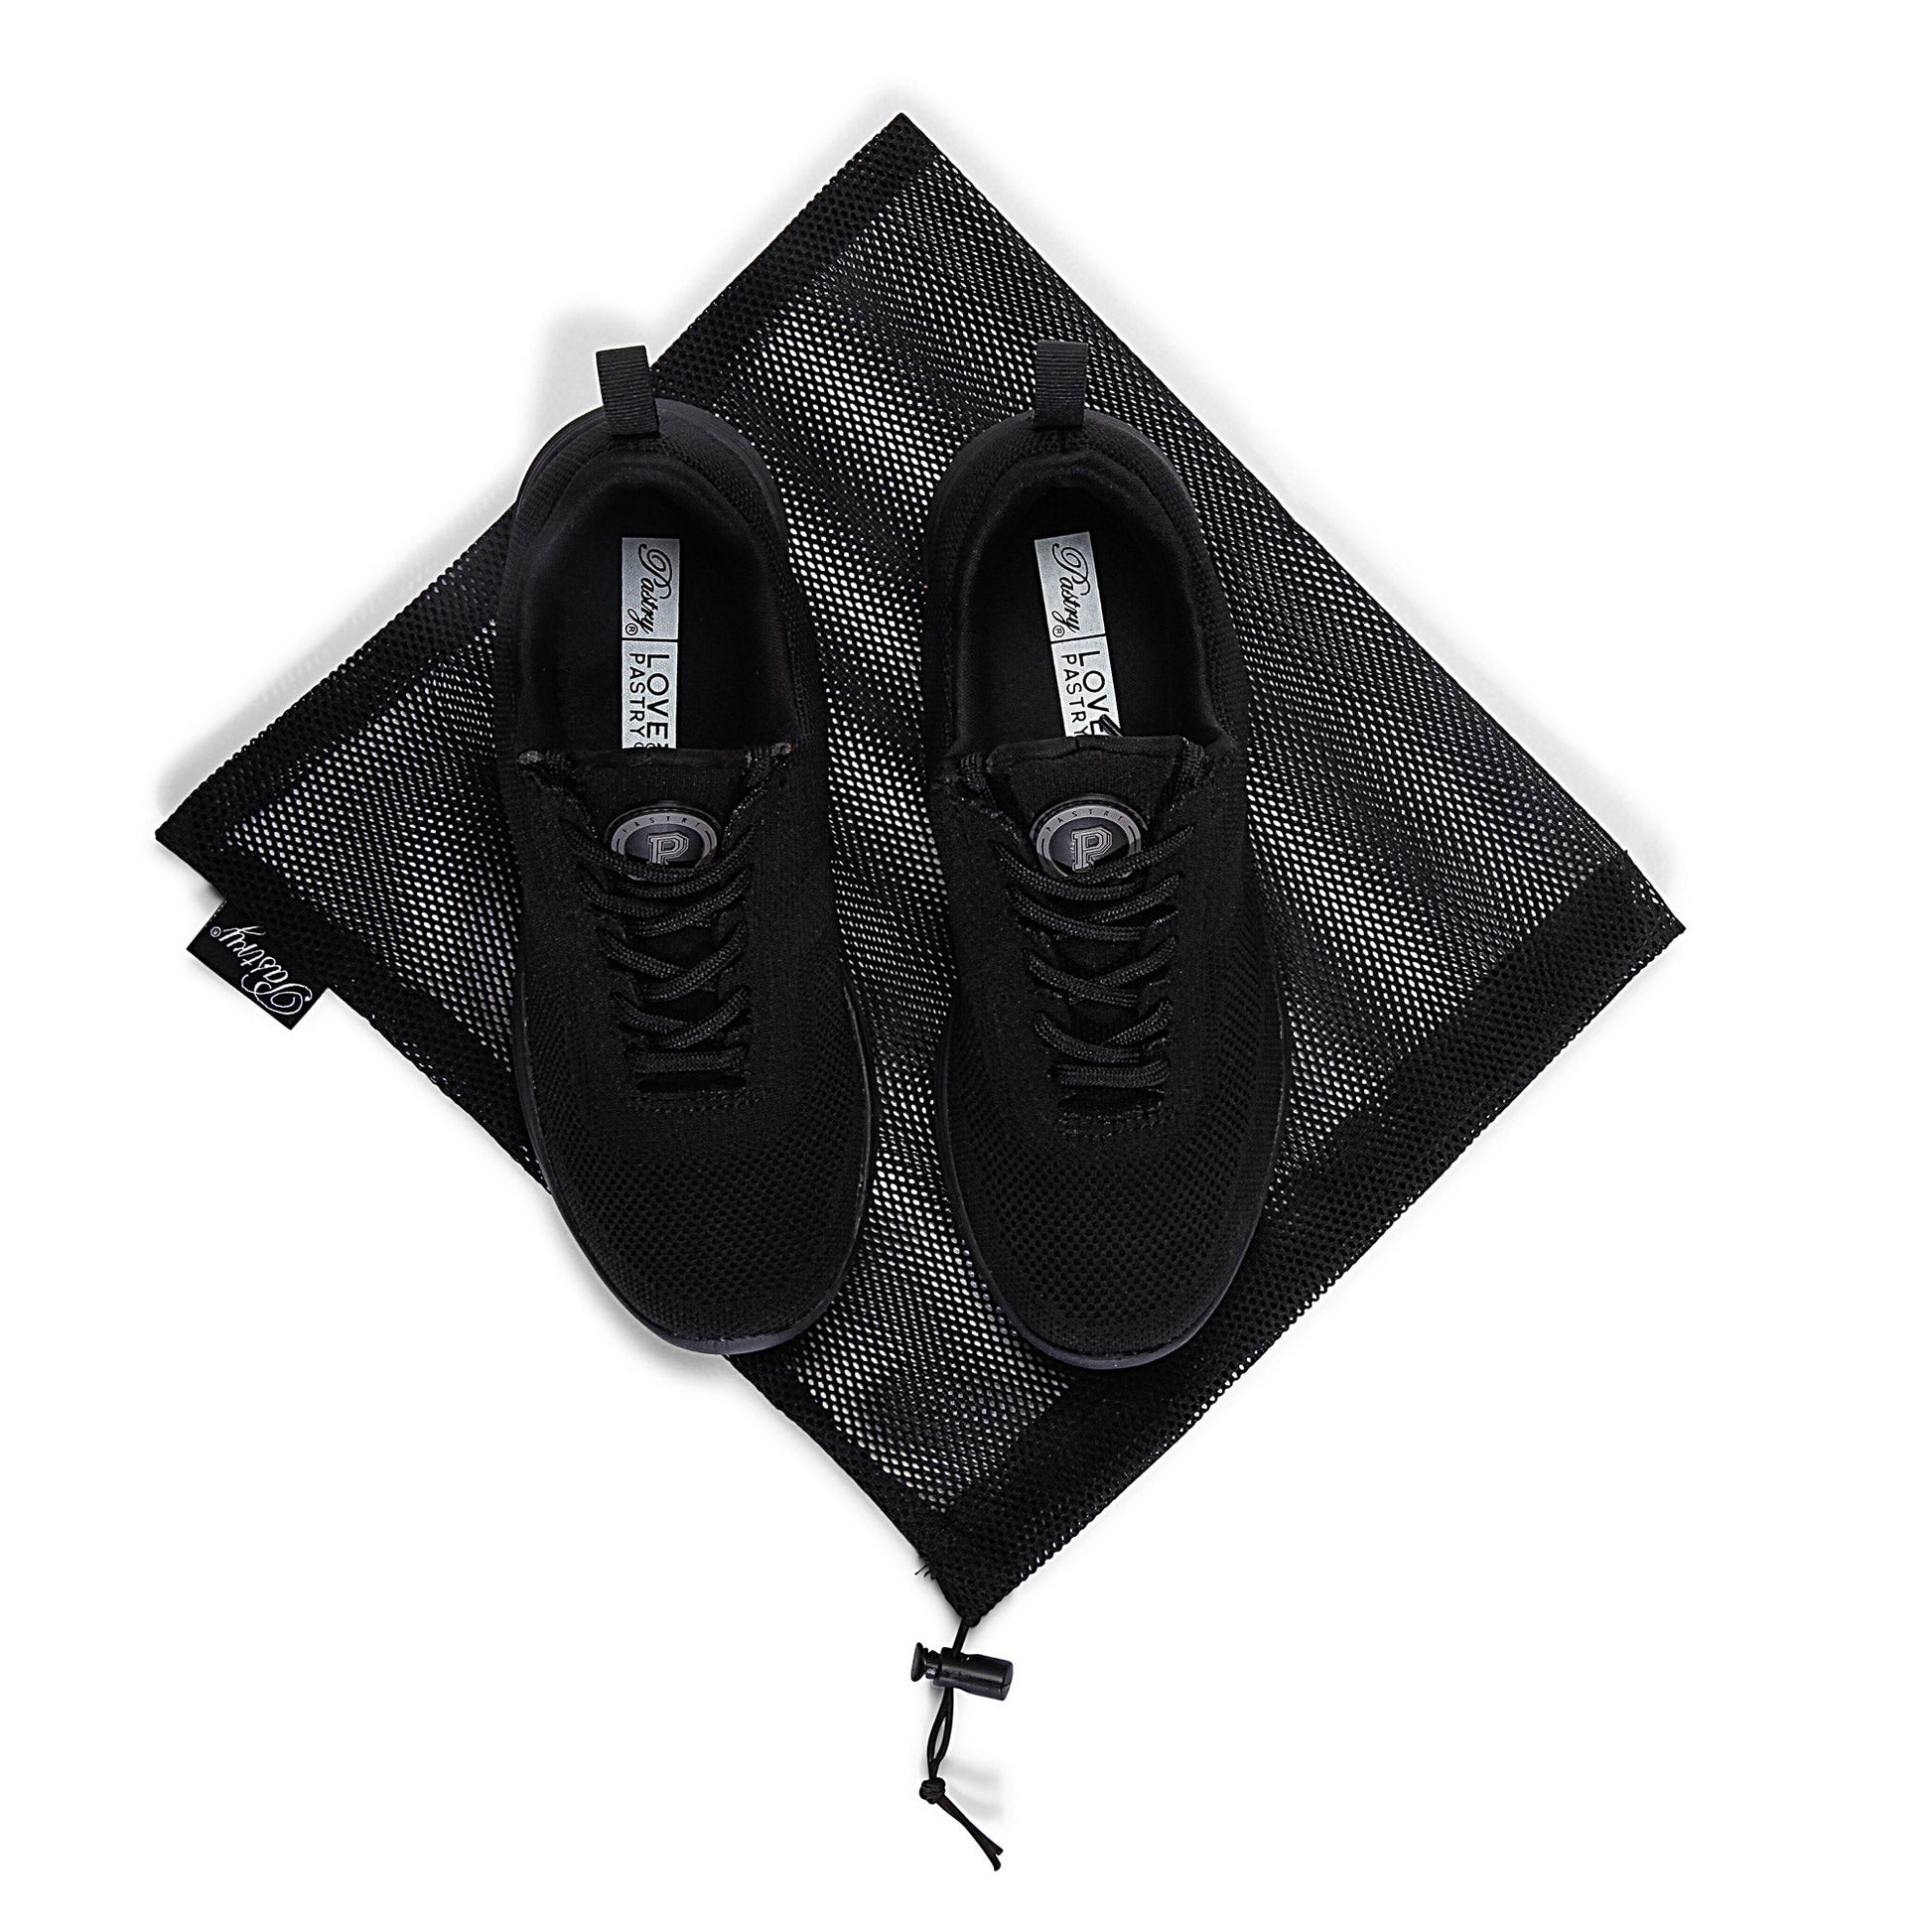 Pastry Studio TR2 Adult Women's Sneaker in Black/Black with bag